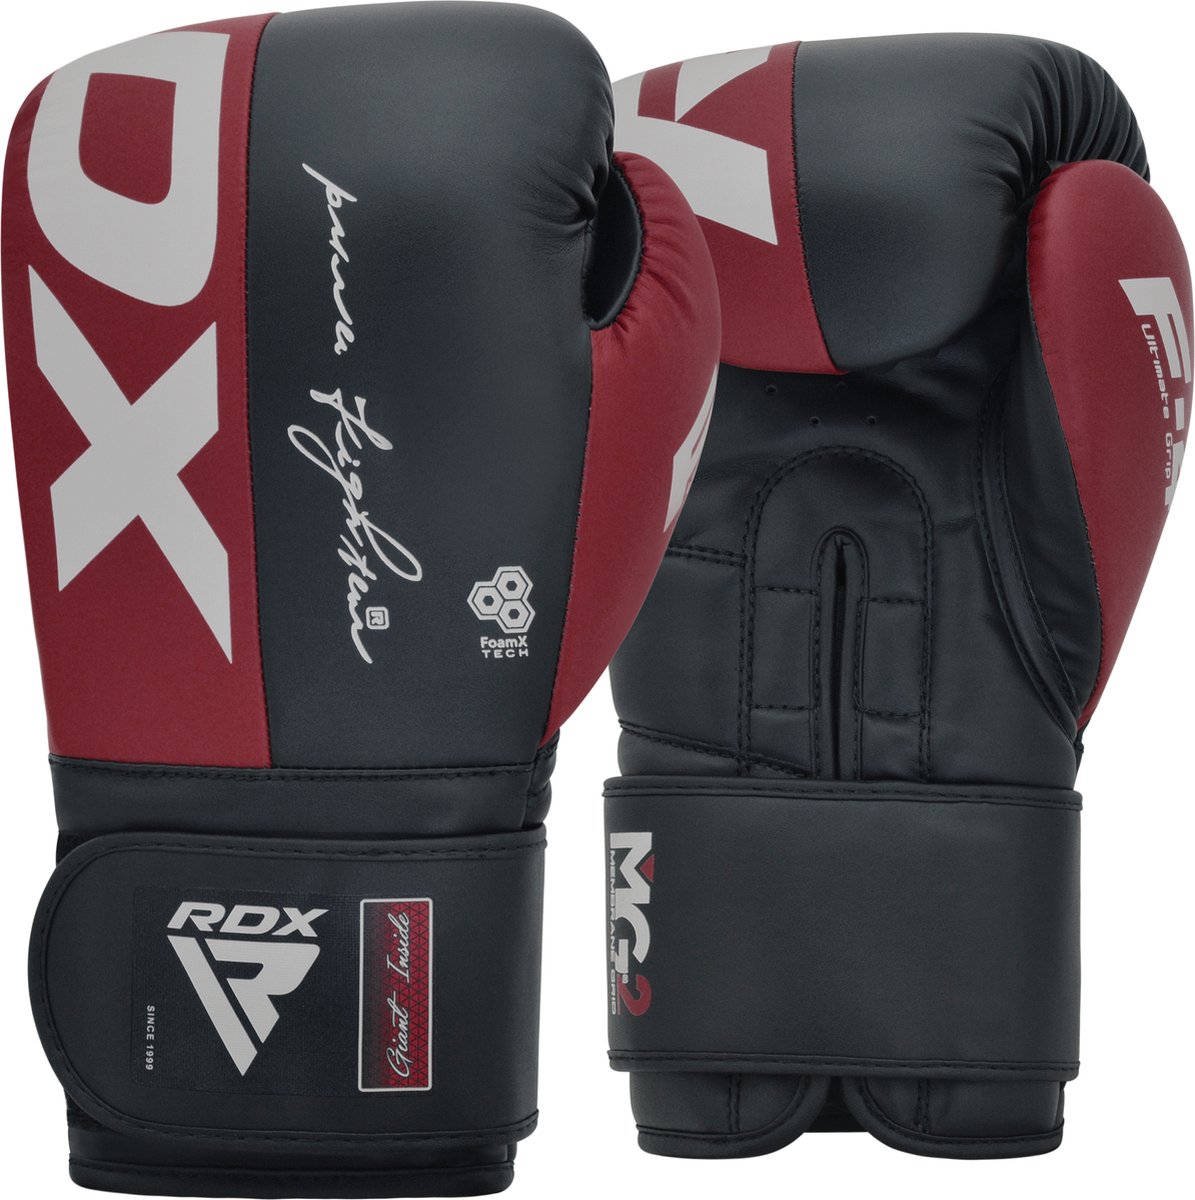 RDX Sports Rex F4 Bokshandschoenen - Boxing Gloves - Sparring - Vechtsporthandschoenen - Boksen - Kastanjebruin - 10 oz